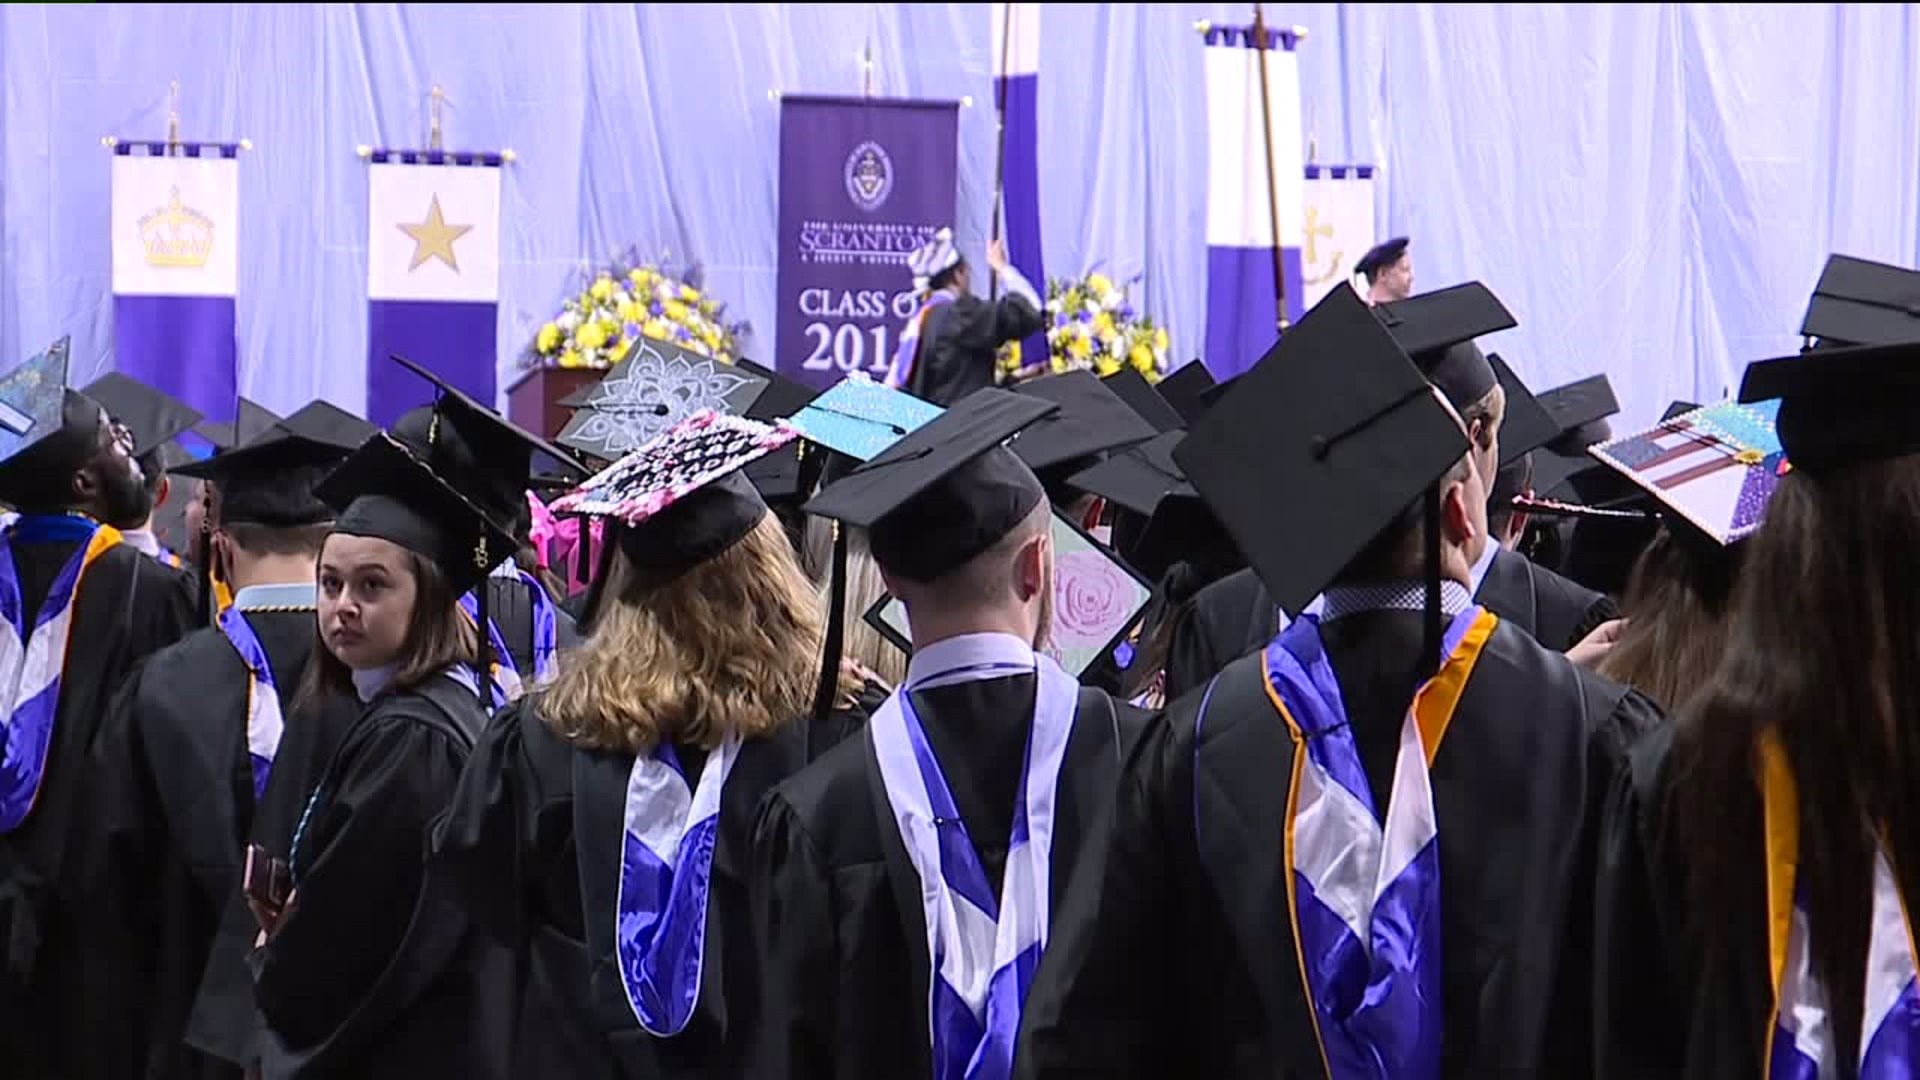 University of Scranton Graduates Take the Stage